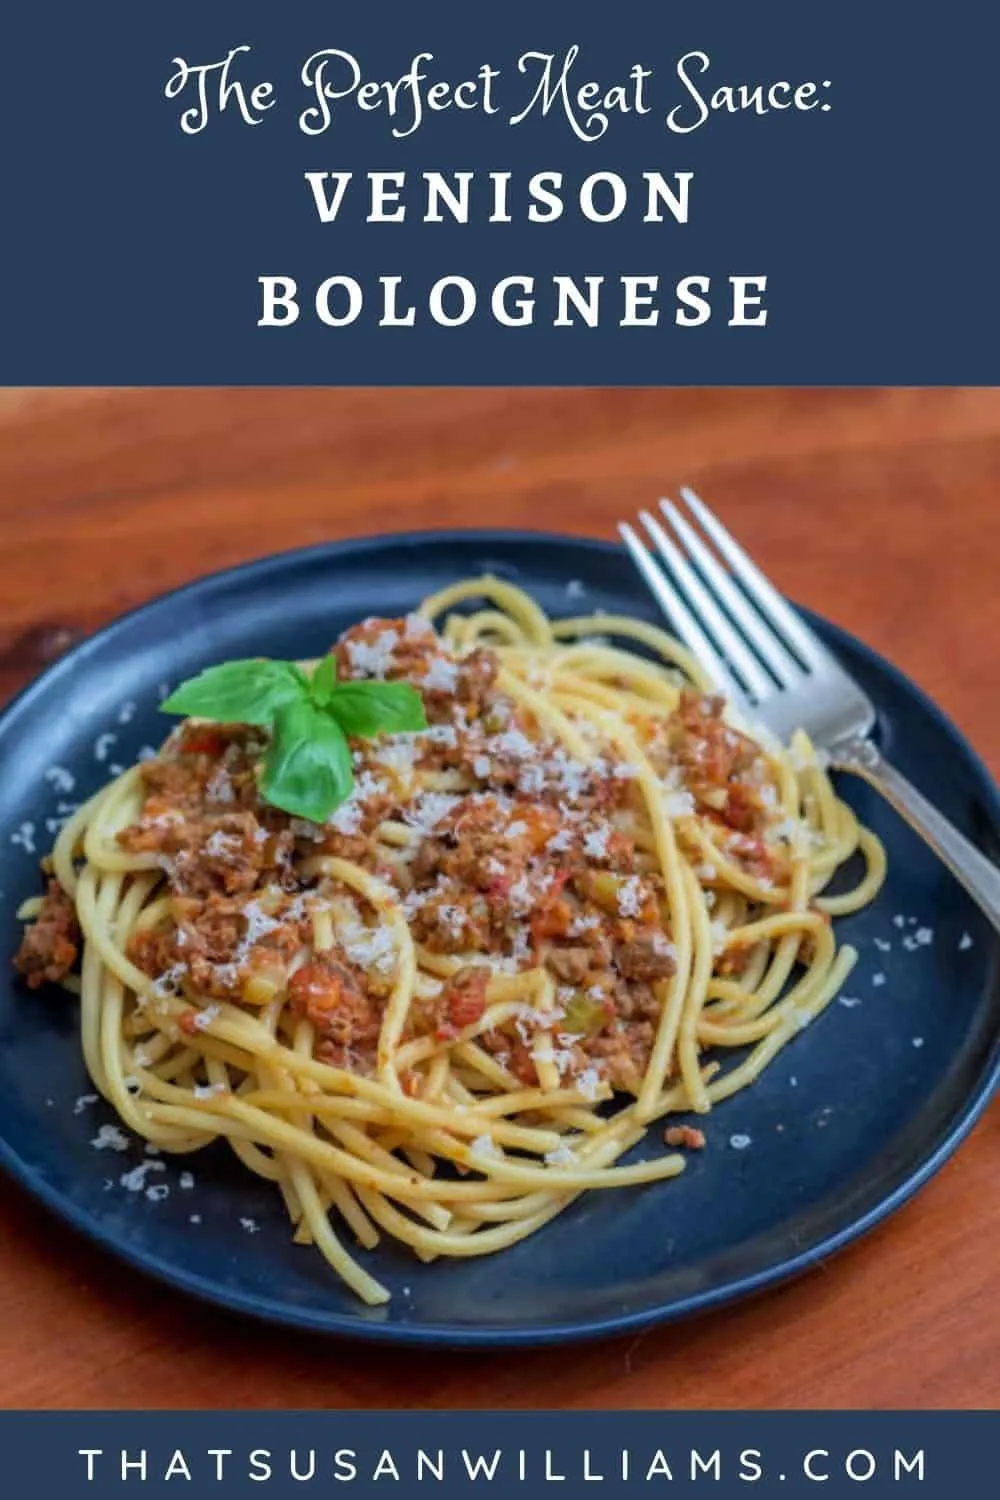 The Perfect Meat Sauce: Venison Bolognese